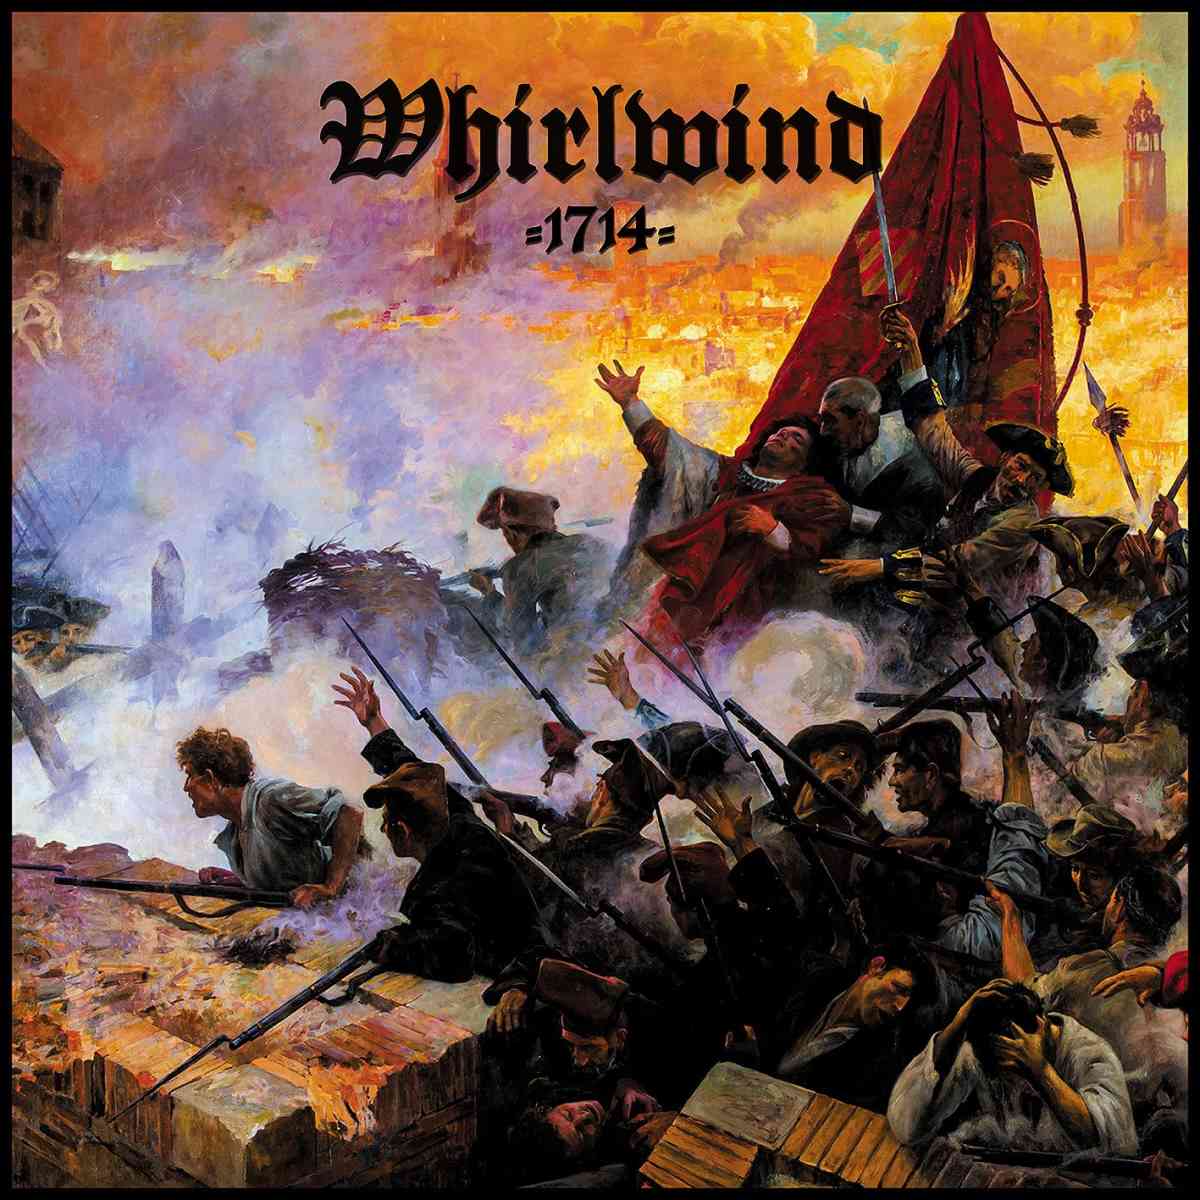 whirlwind - 1714 - album cover